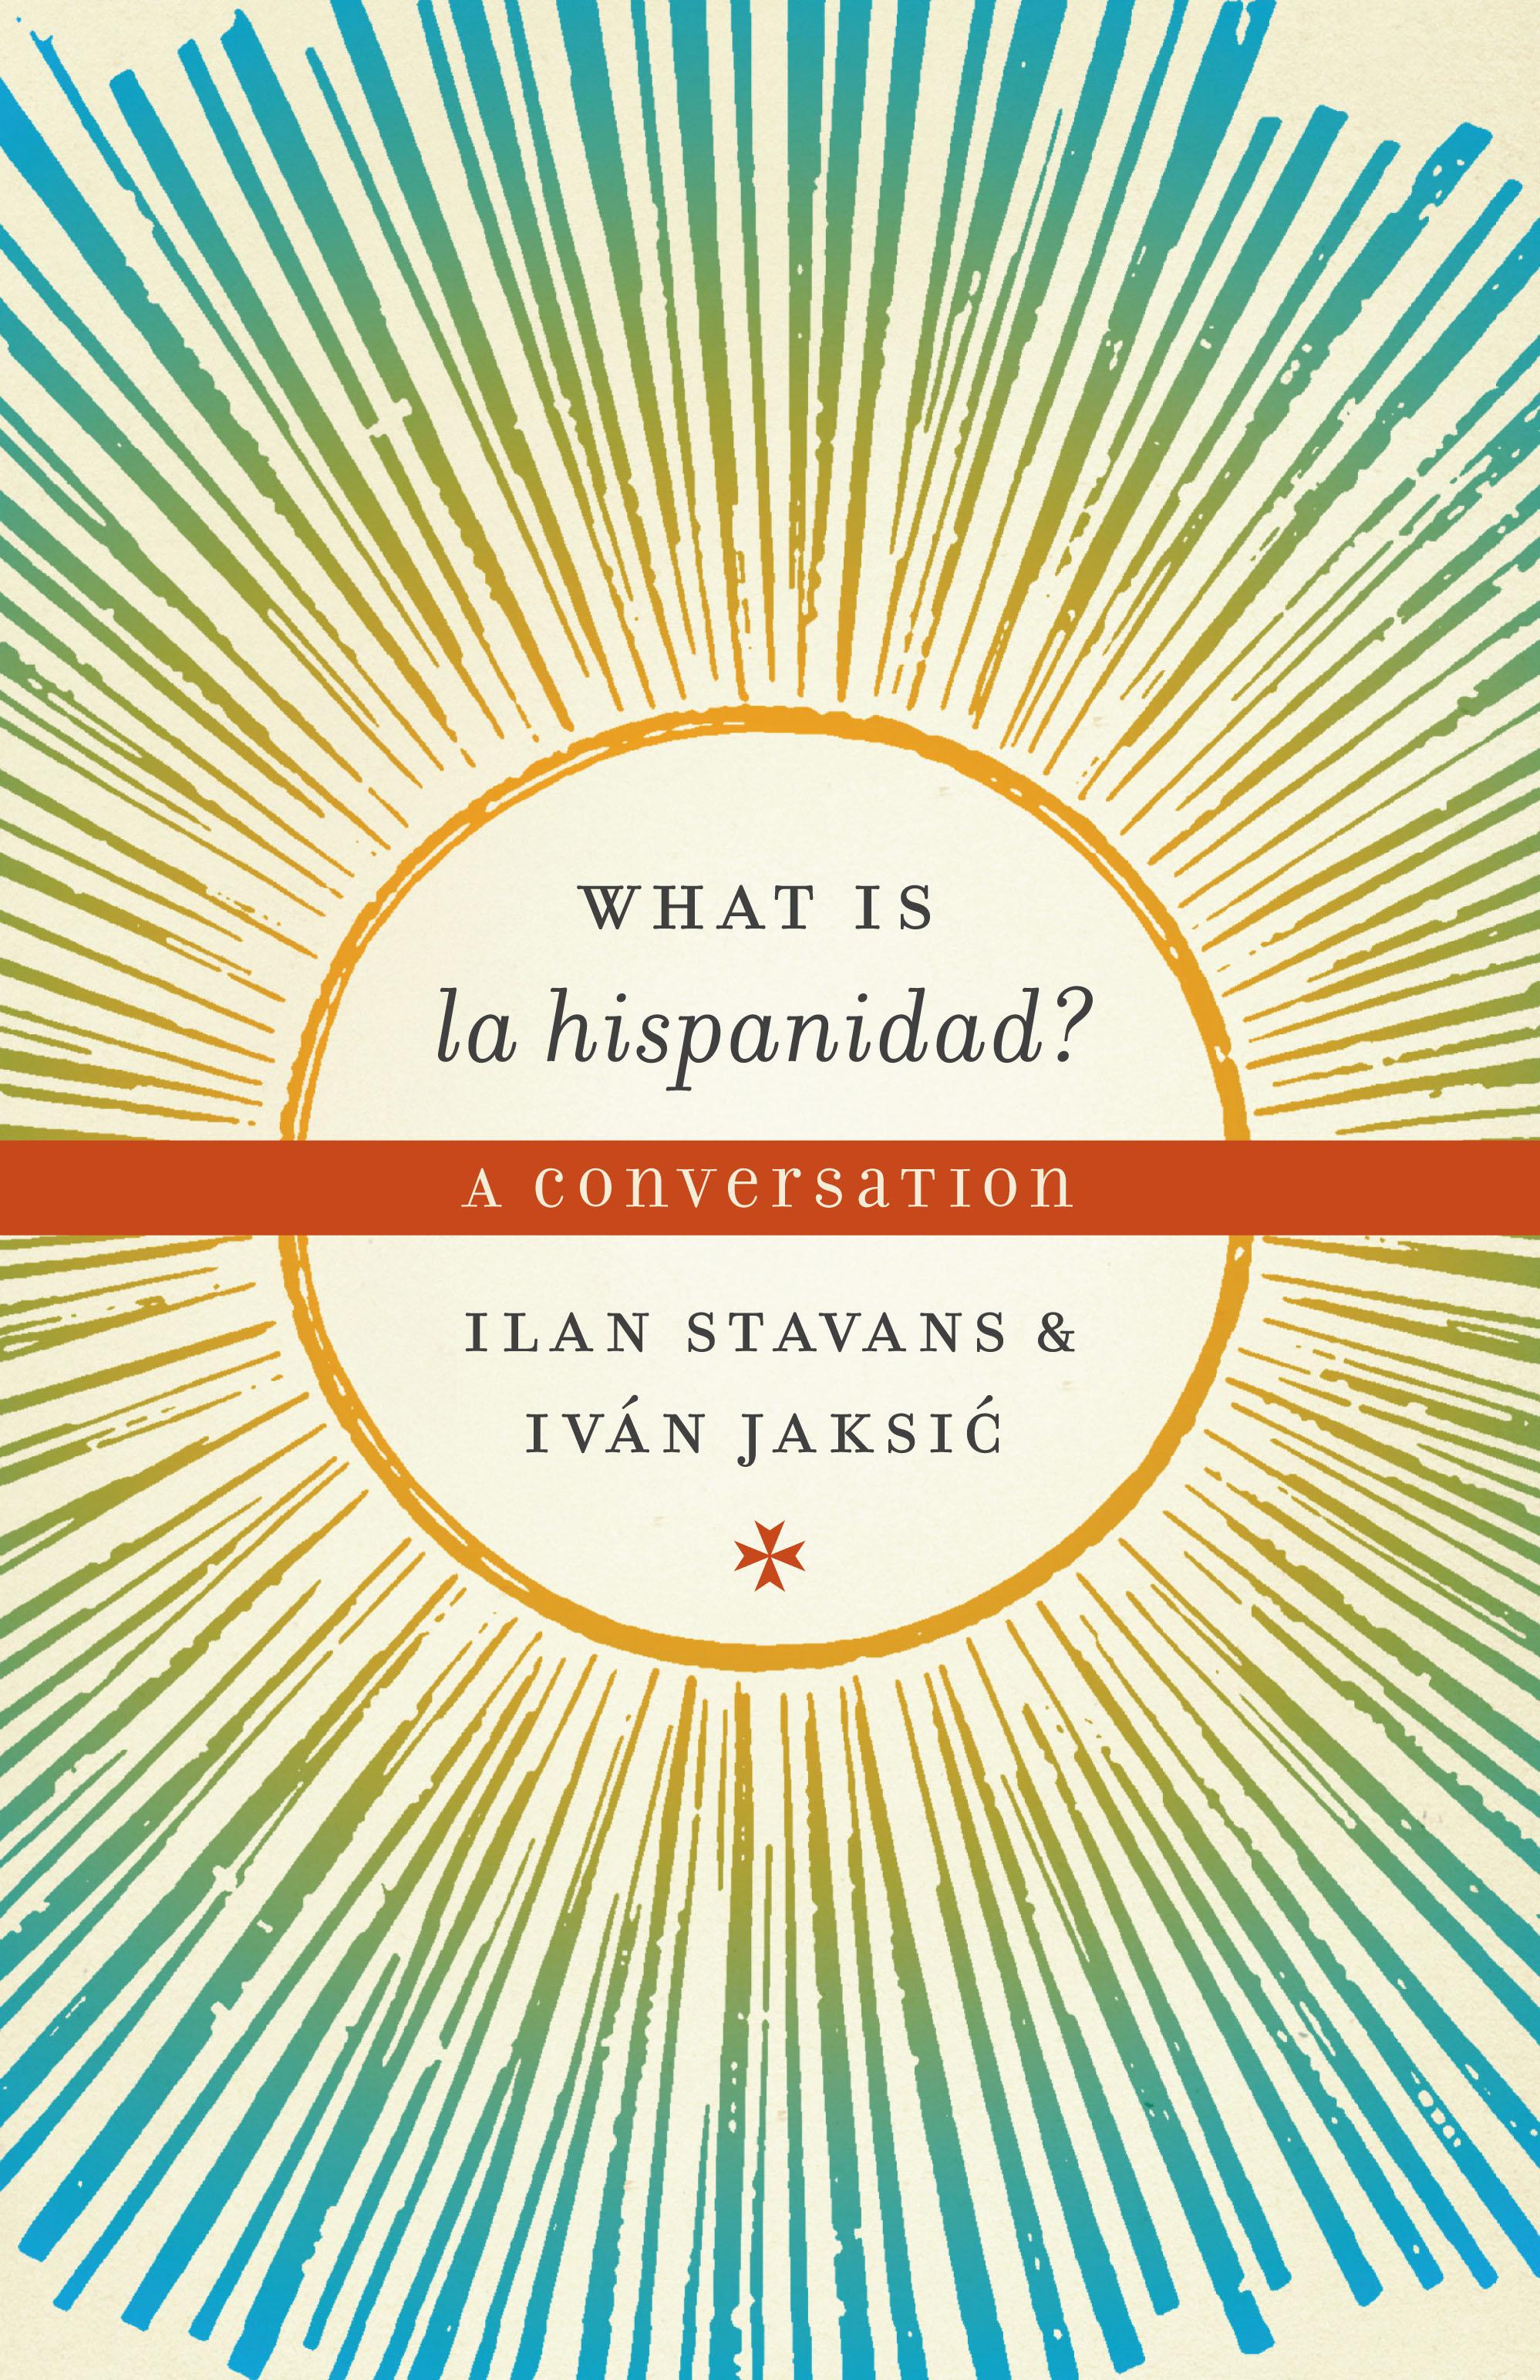 What is la hispanidad?